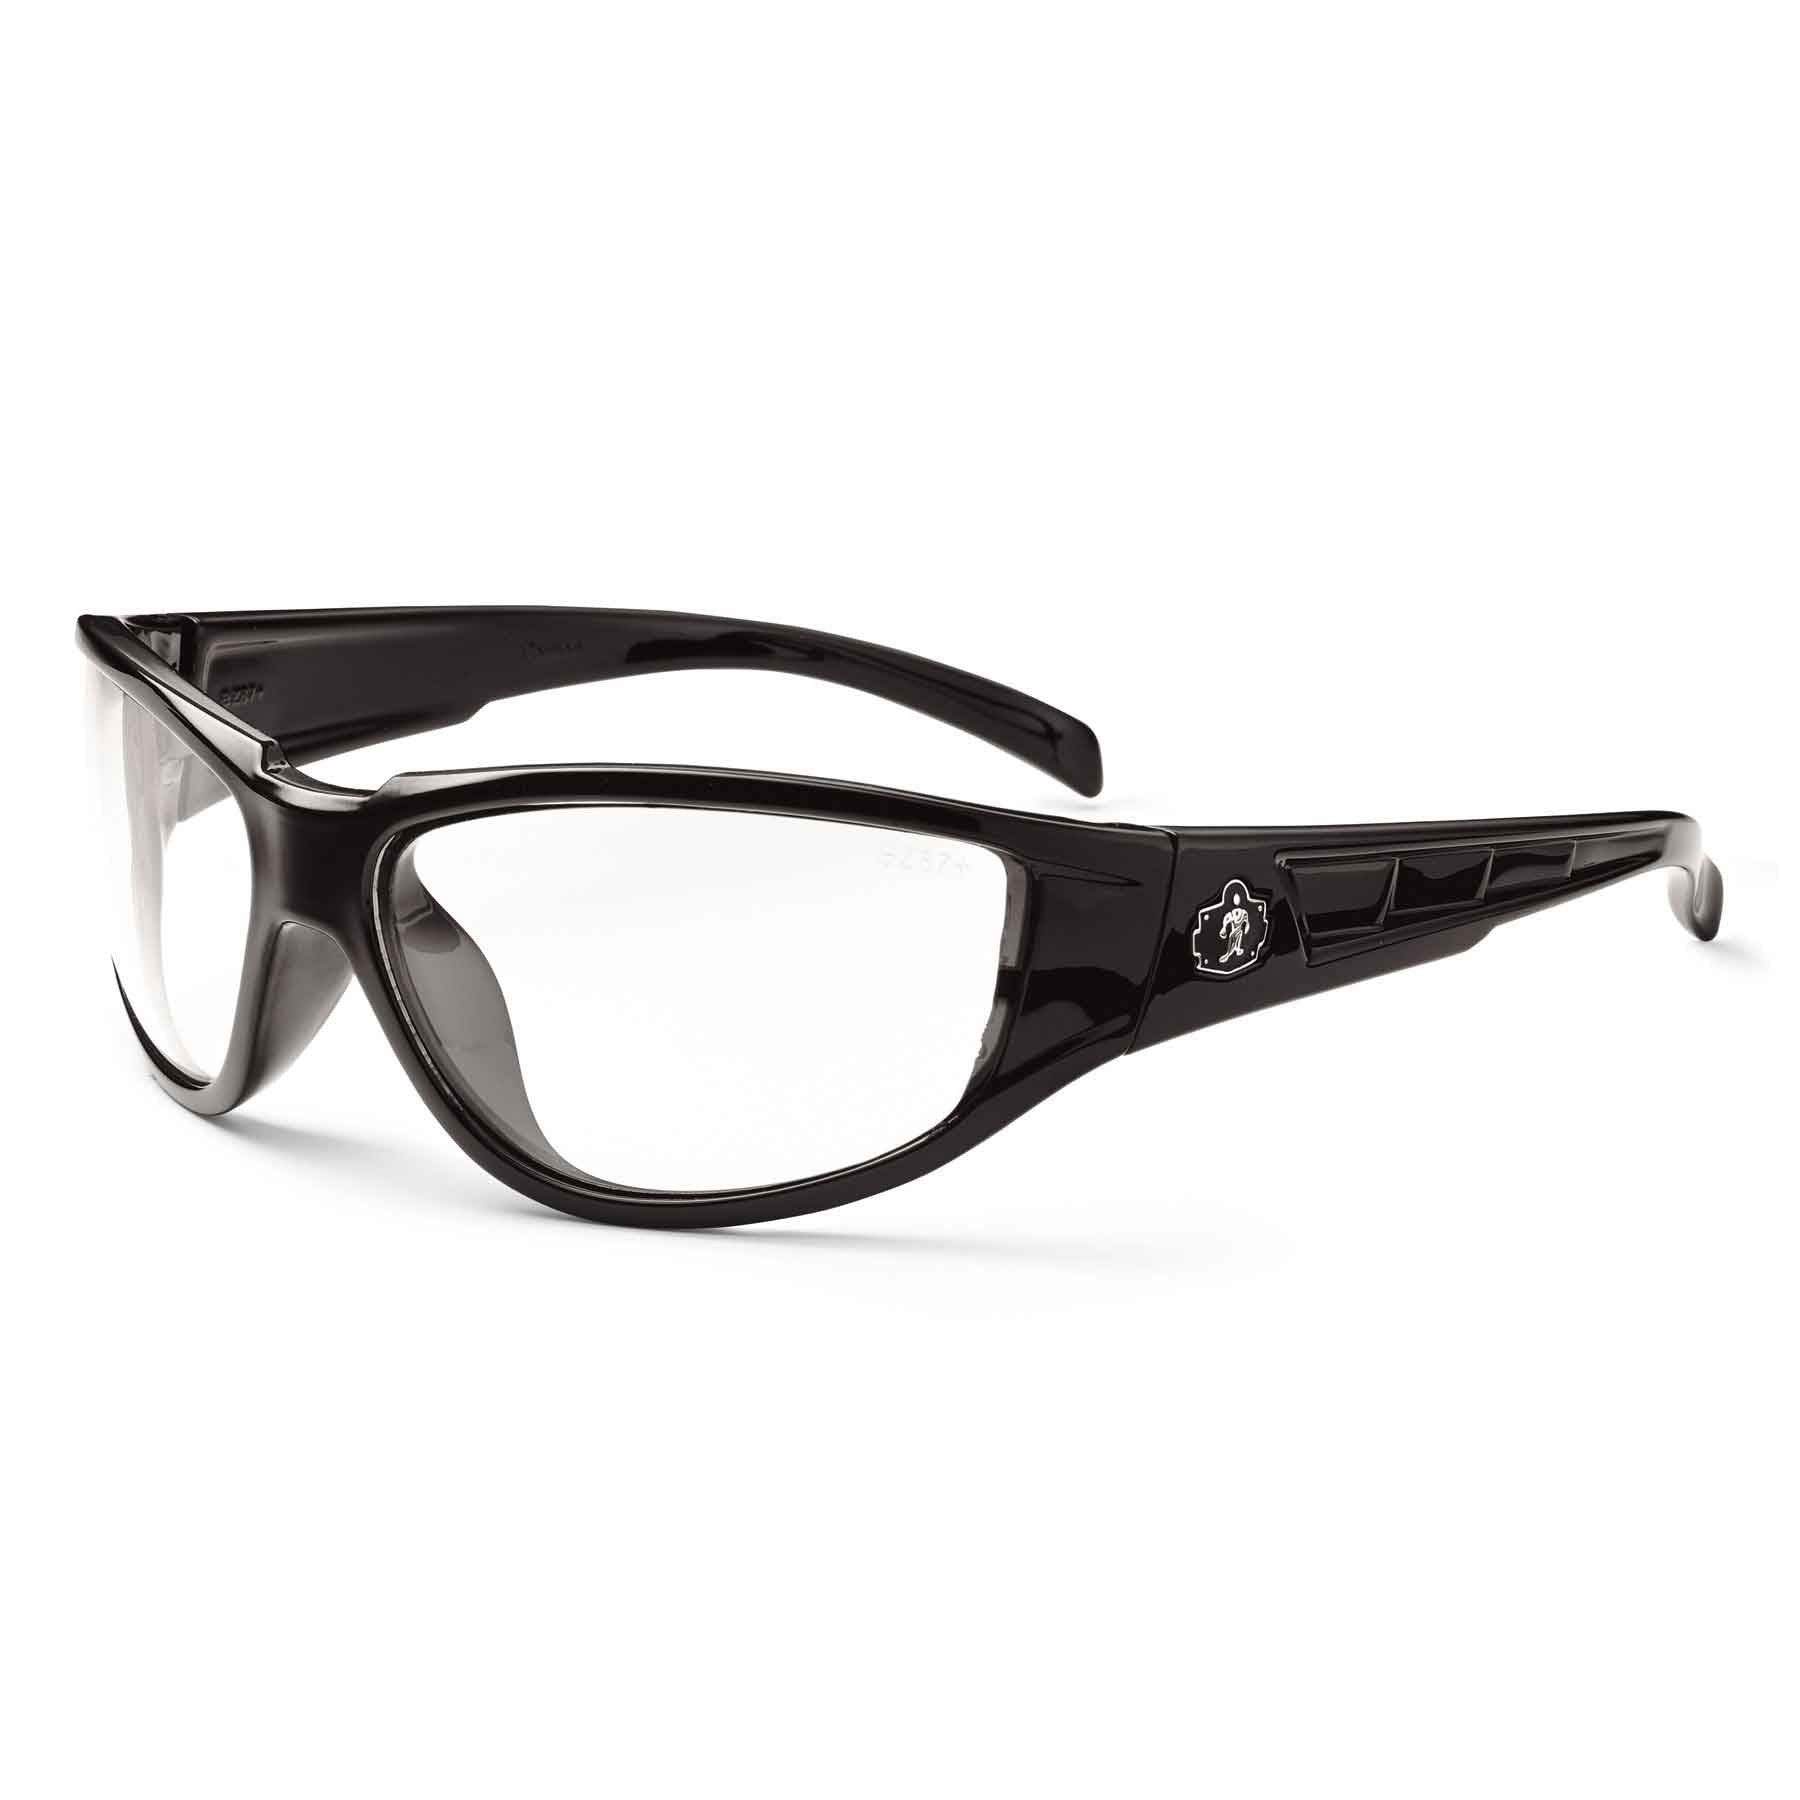 Skullerz Njord Safety Glasses-eSafety Supplies, Inc